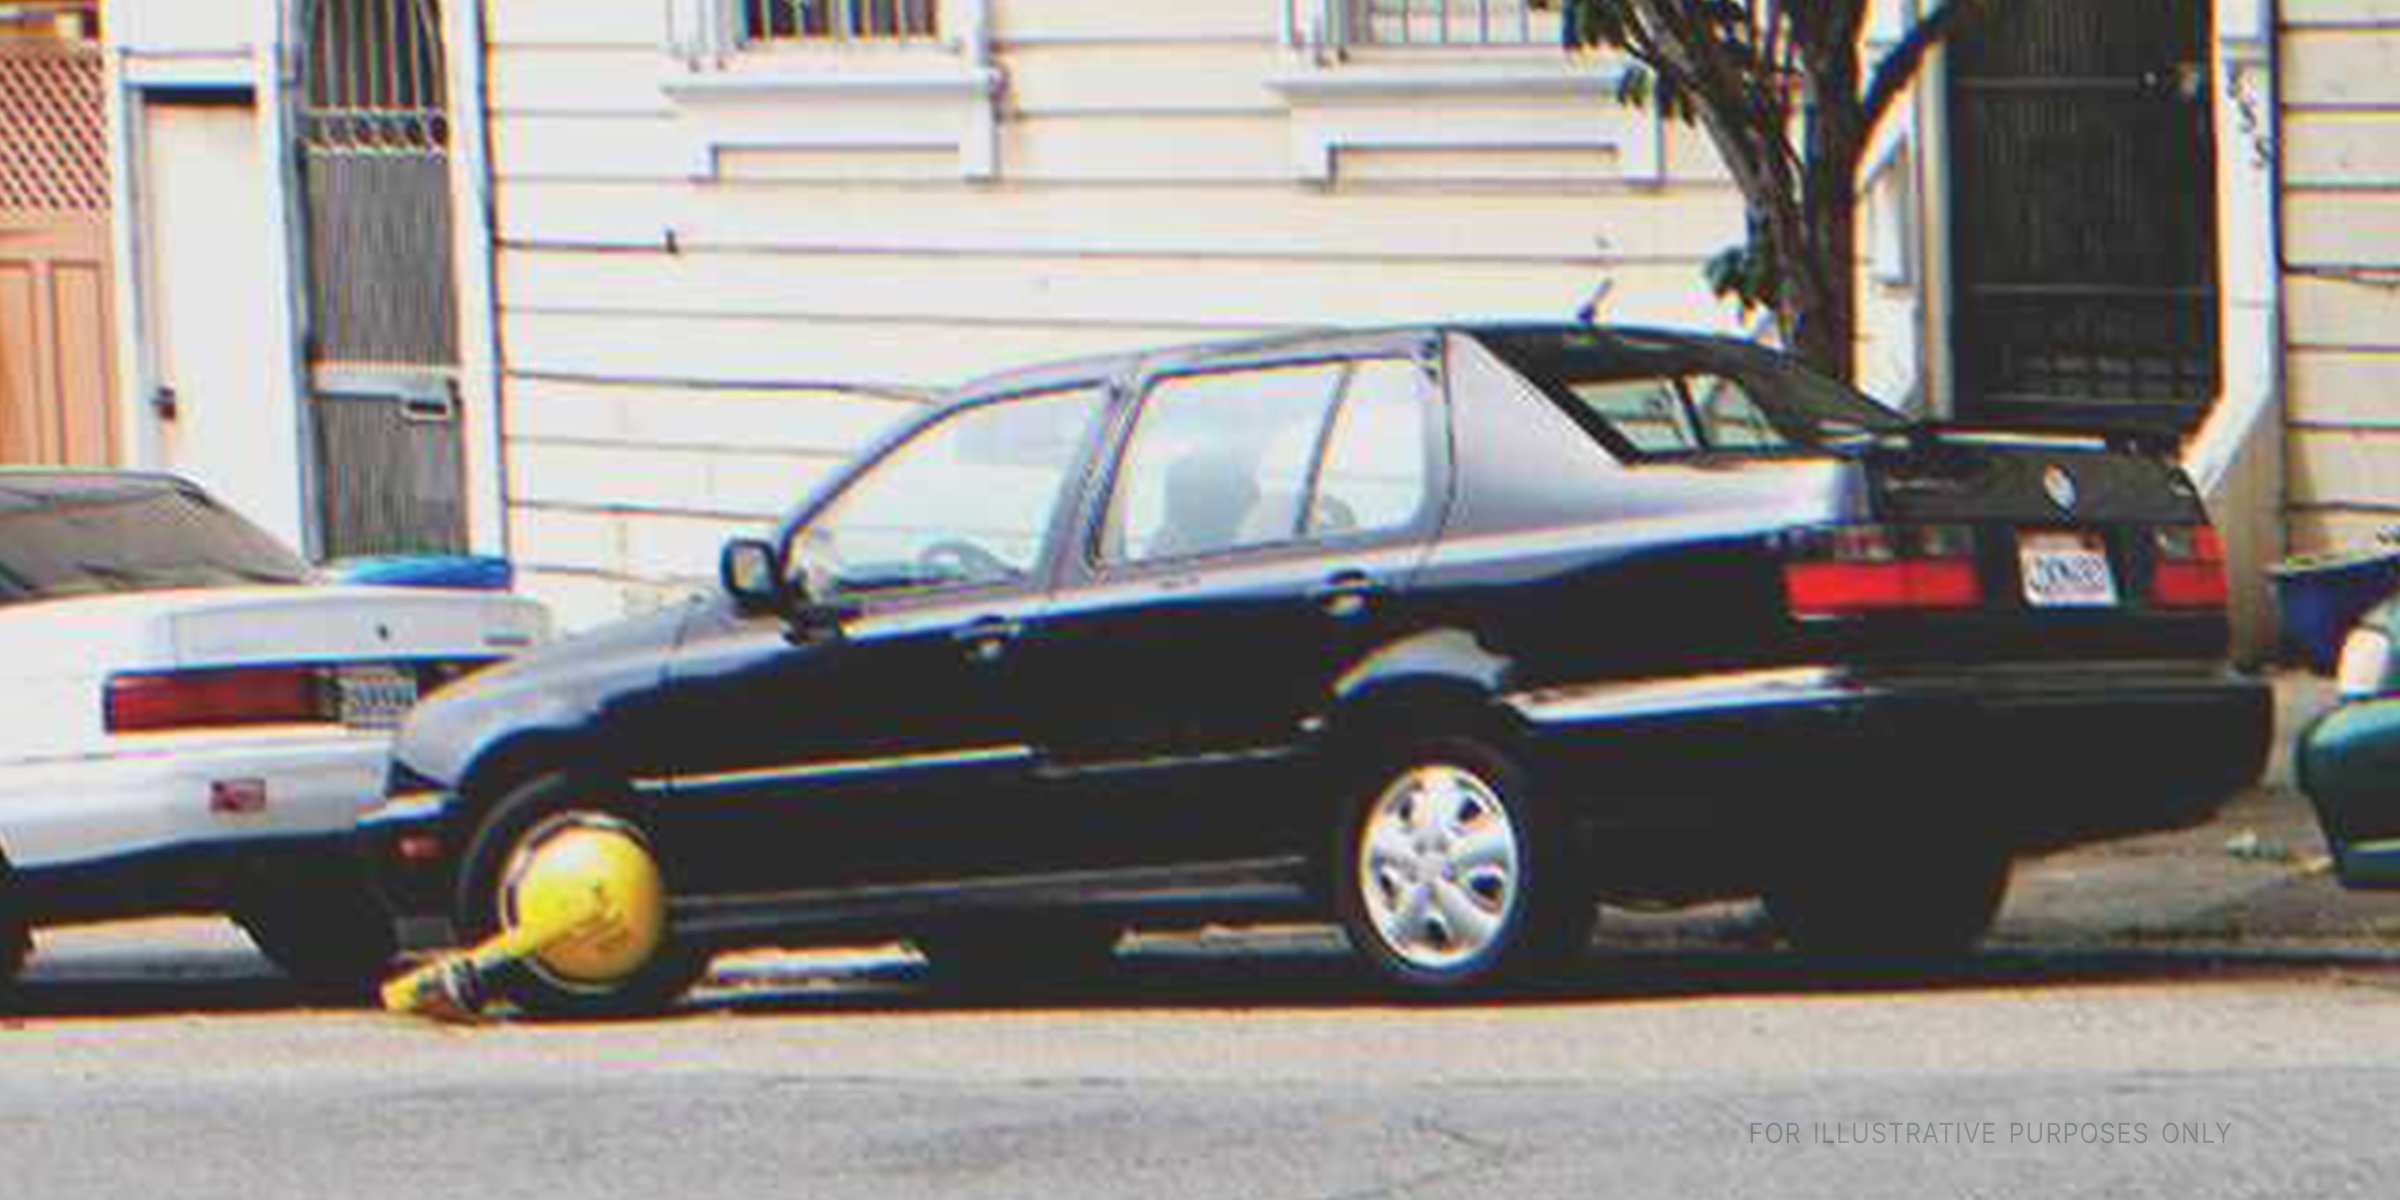 Car with wheel lock on street. | Flickr / ecastro (CC BY 2.0)